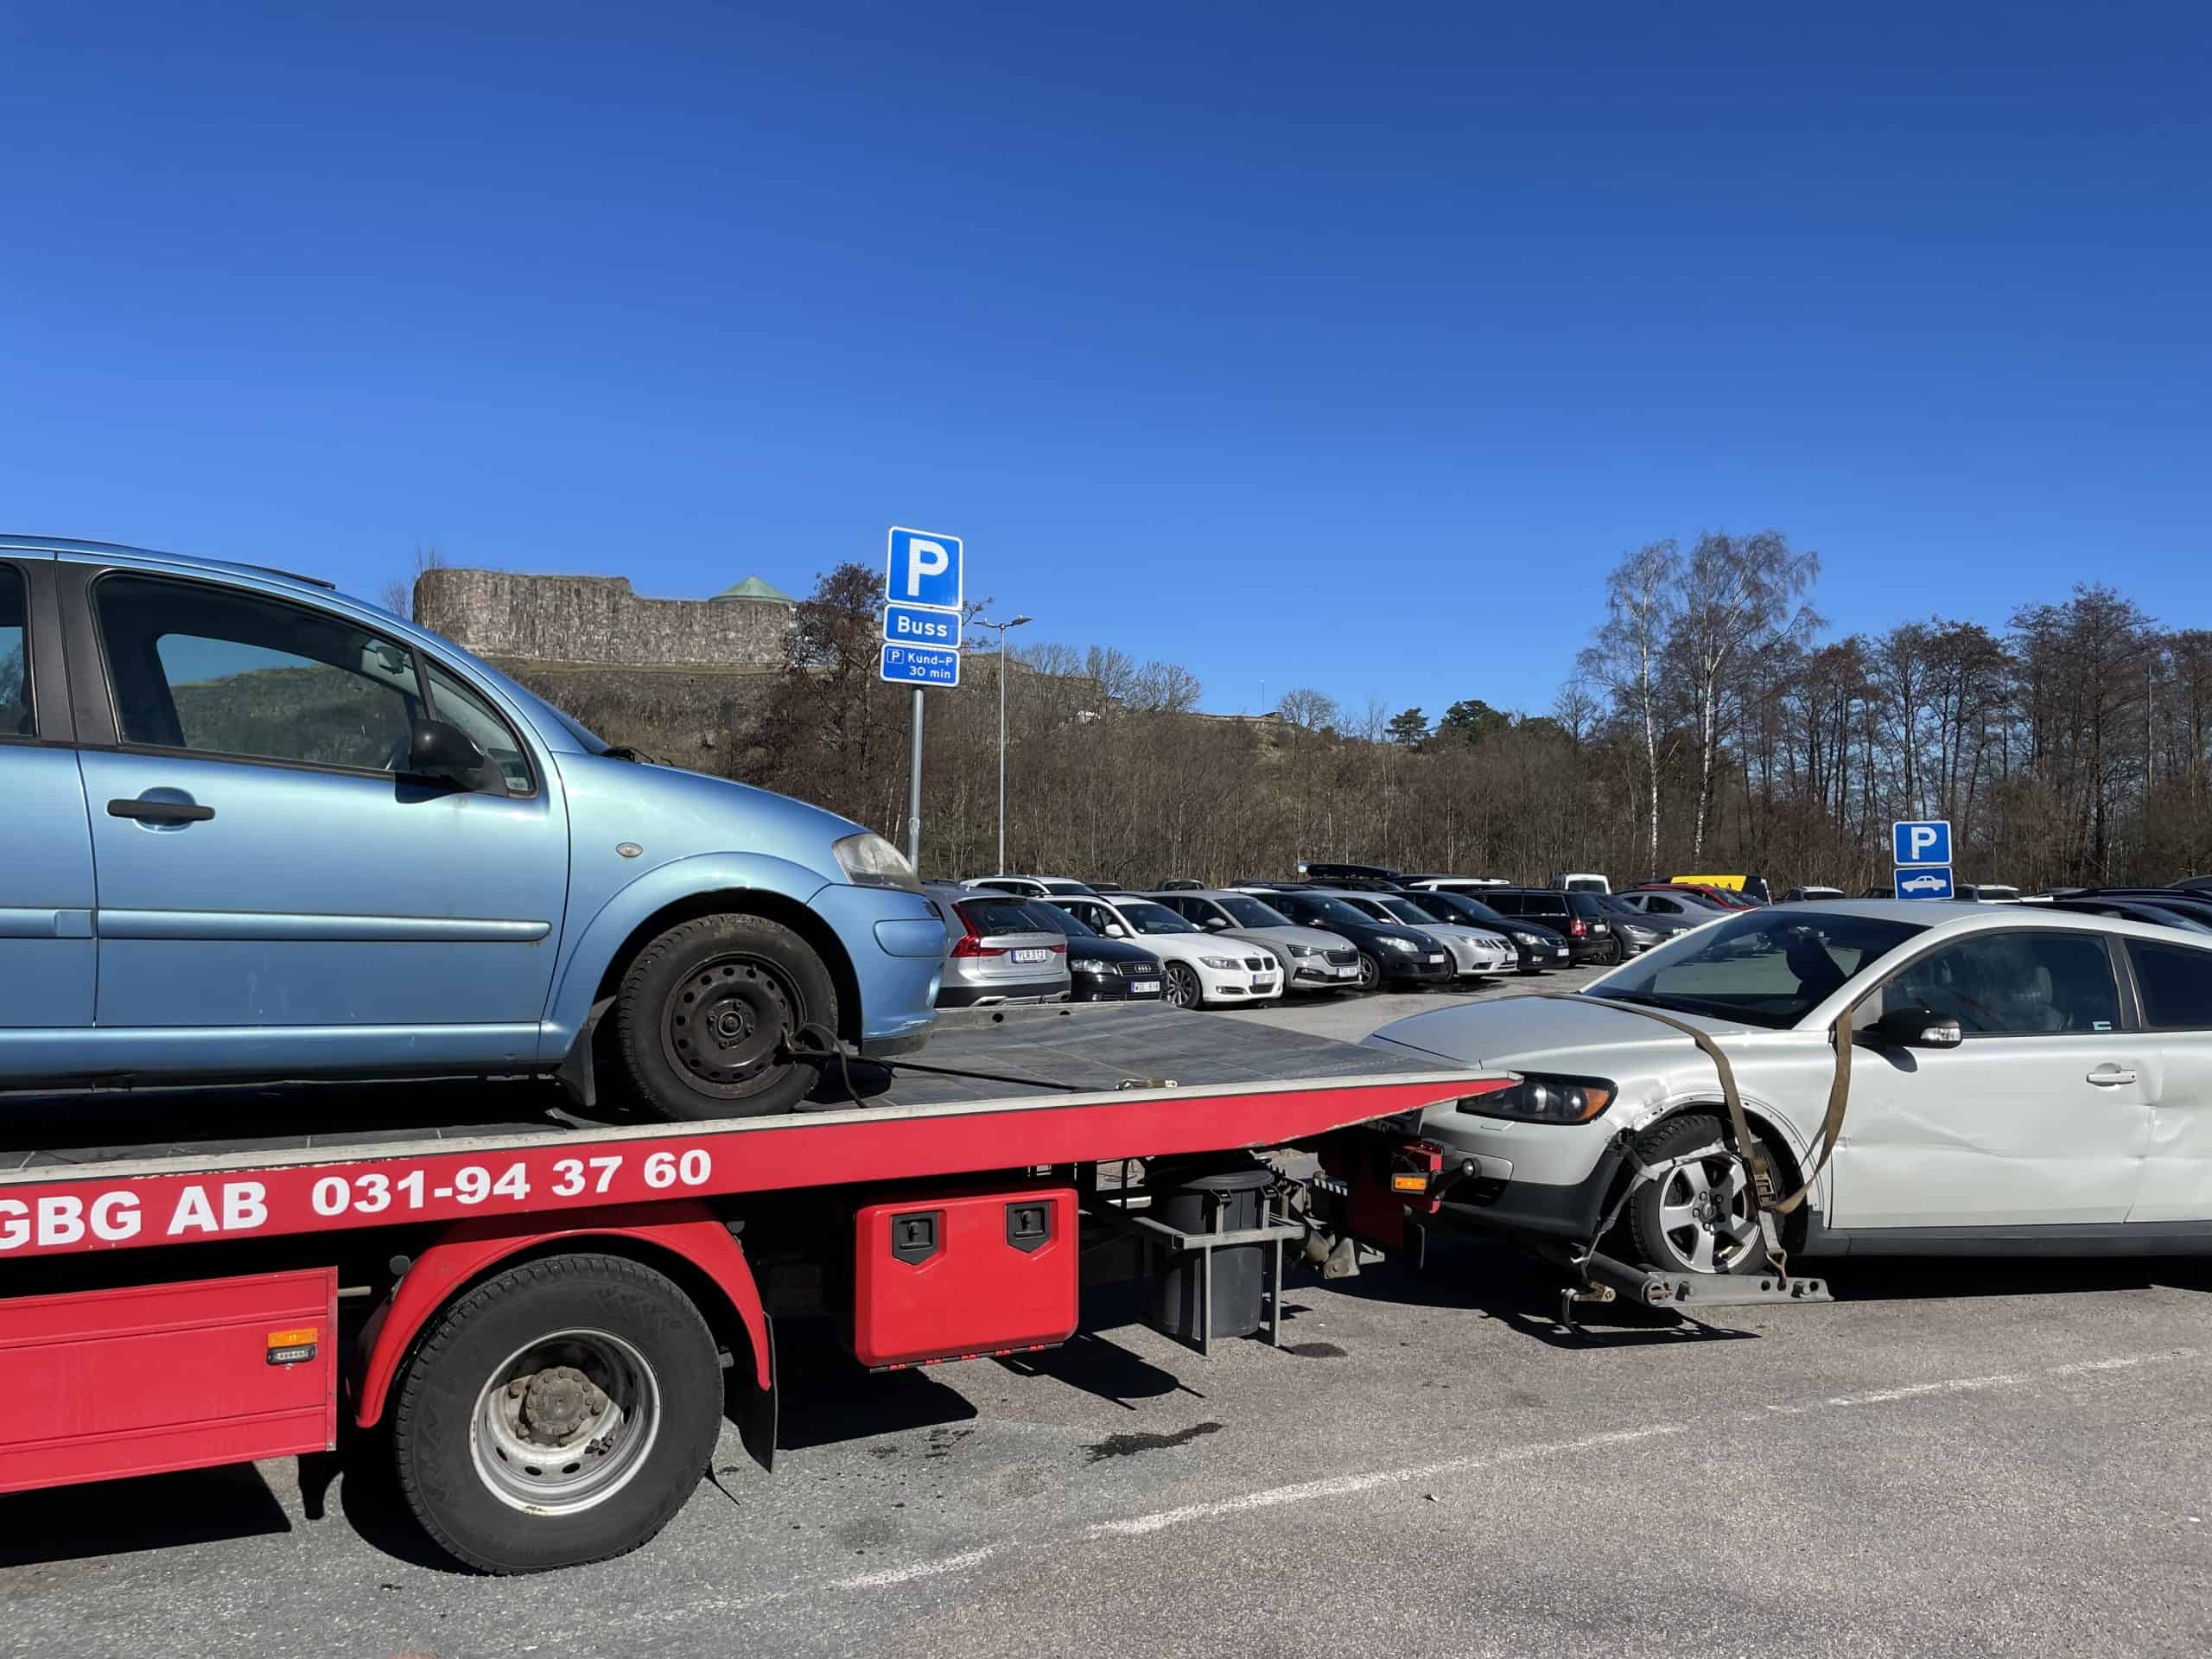 Skrota bilen hos en auktoriserad bilskrot i Torslanda